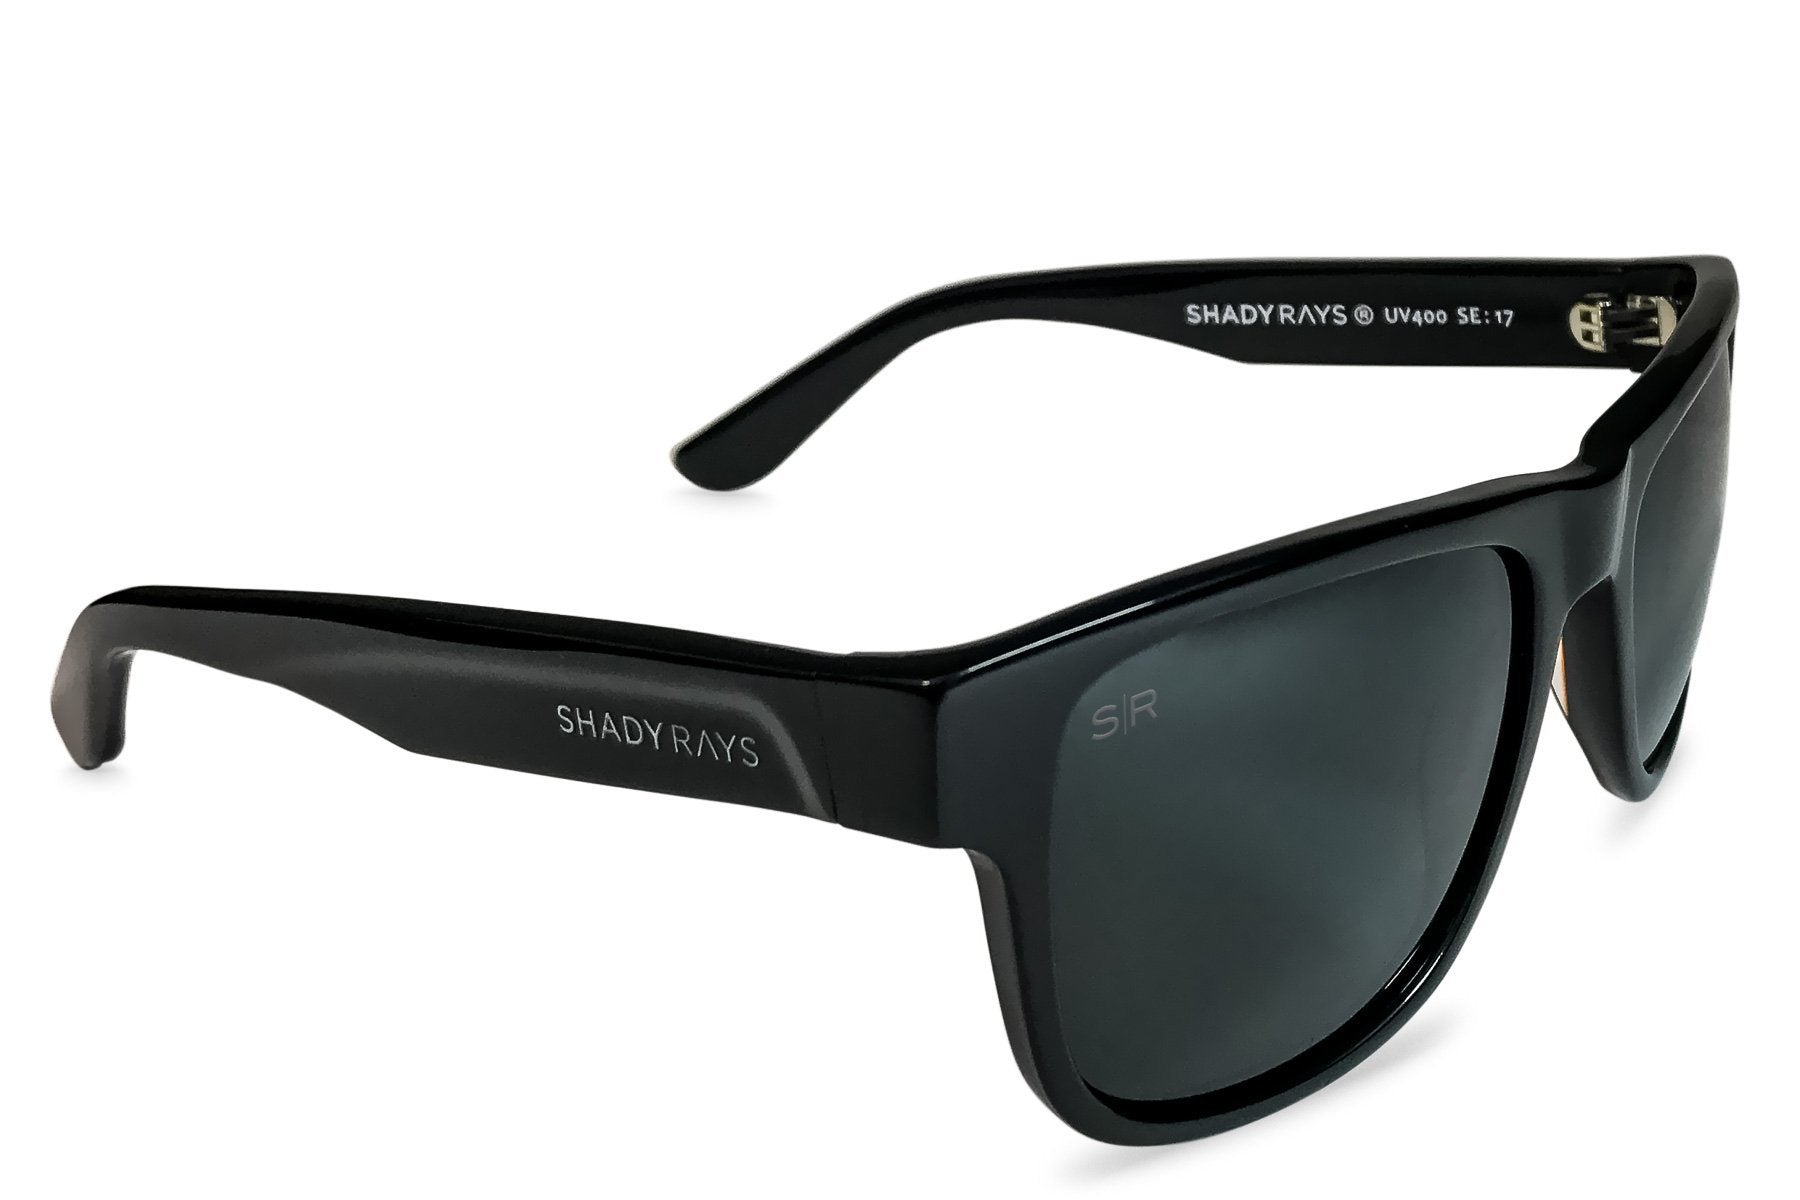 Magic Roy Aviator RX Glasses - Black Top Bar Frame With Prescription Lens